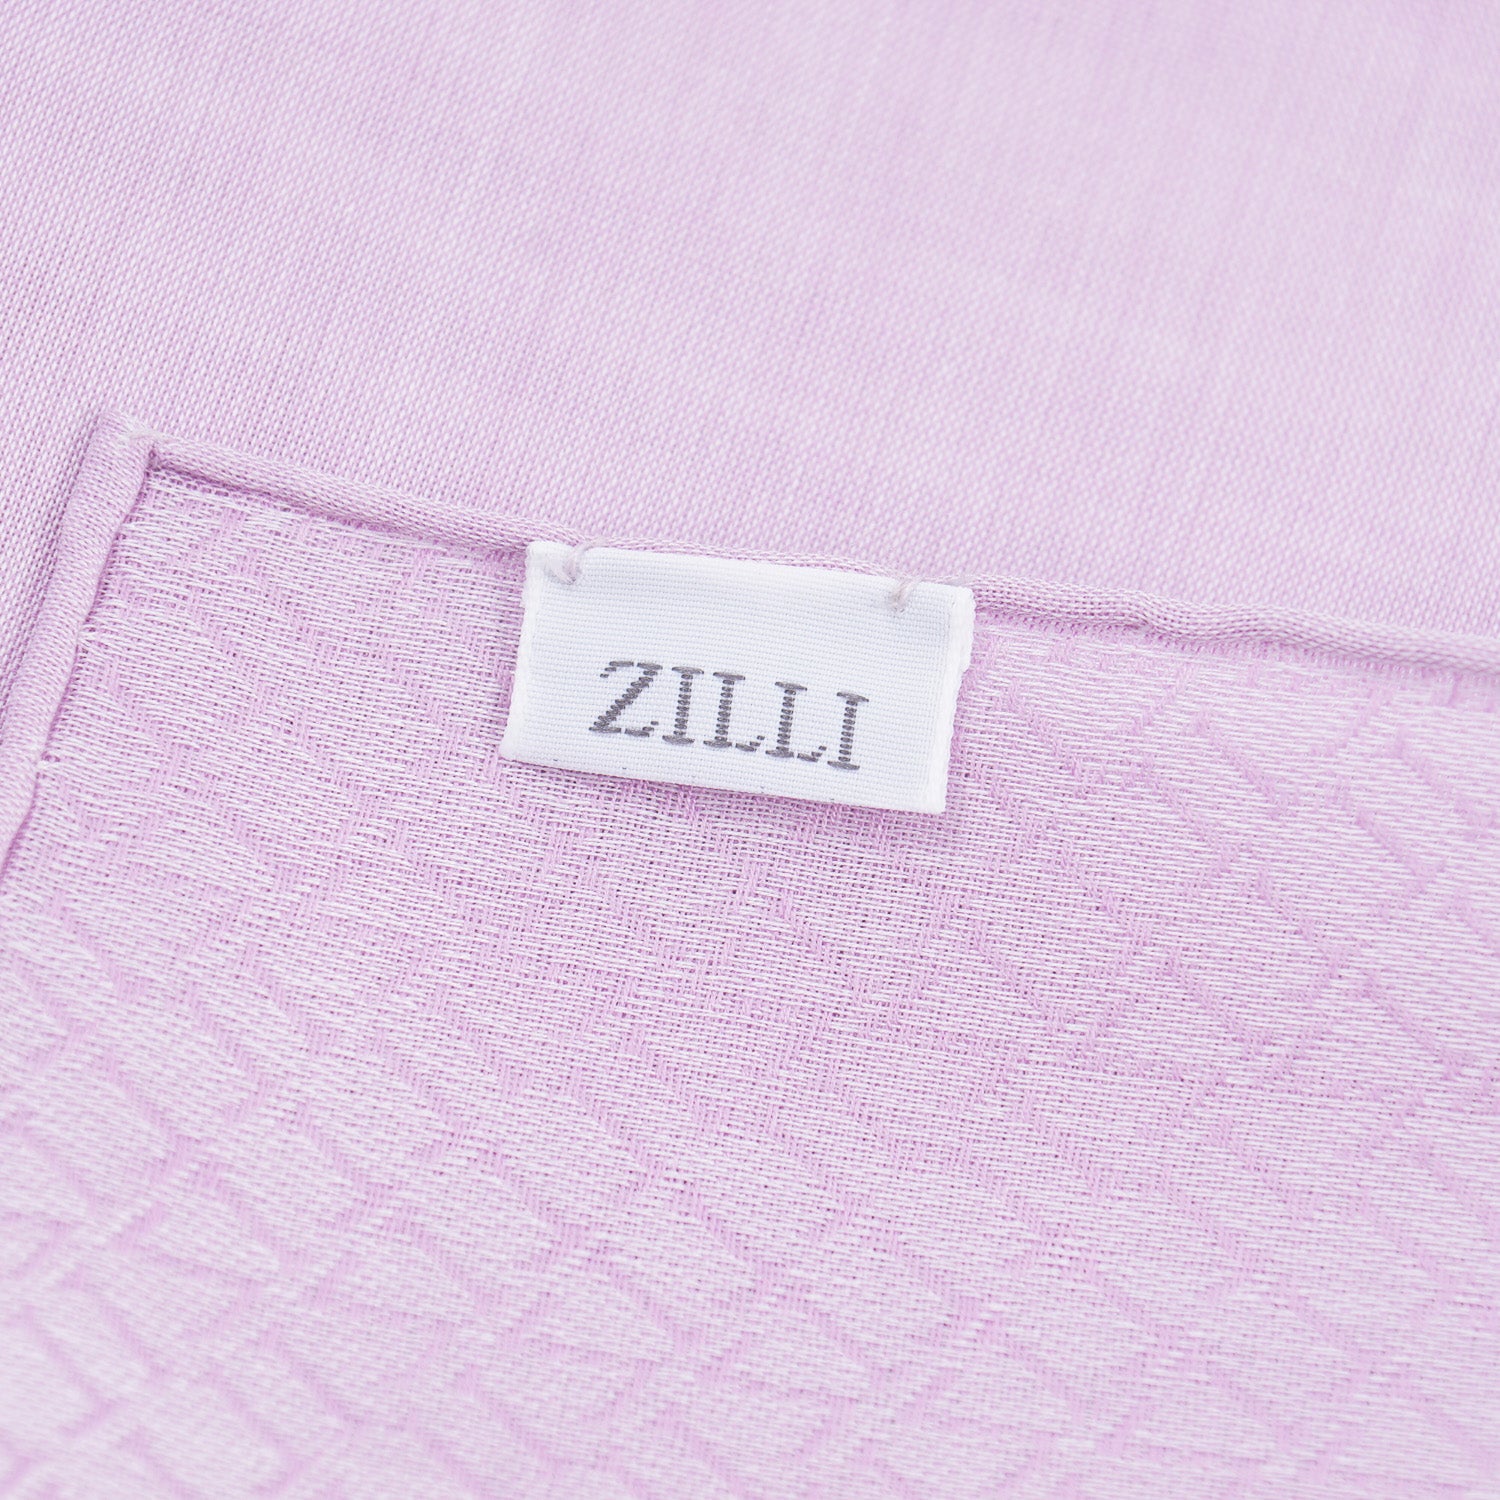 Zilli Monogram Cotton Pocket Square - Top Shelf Apparel